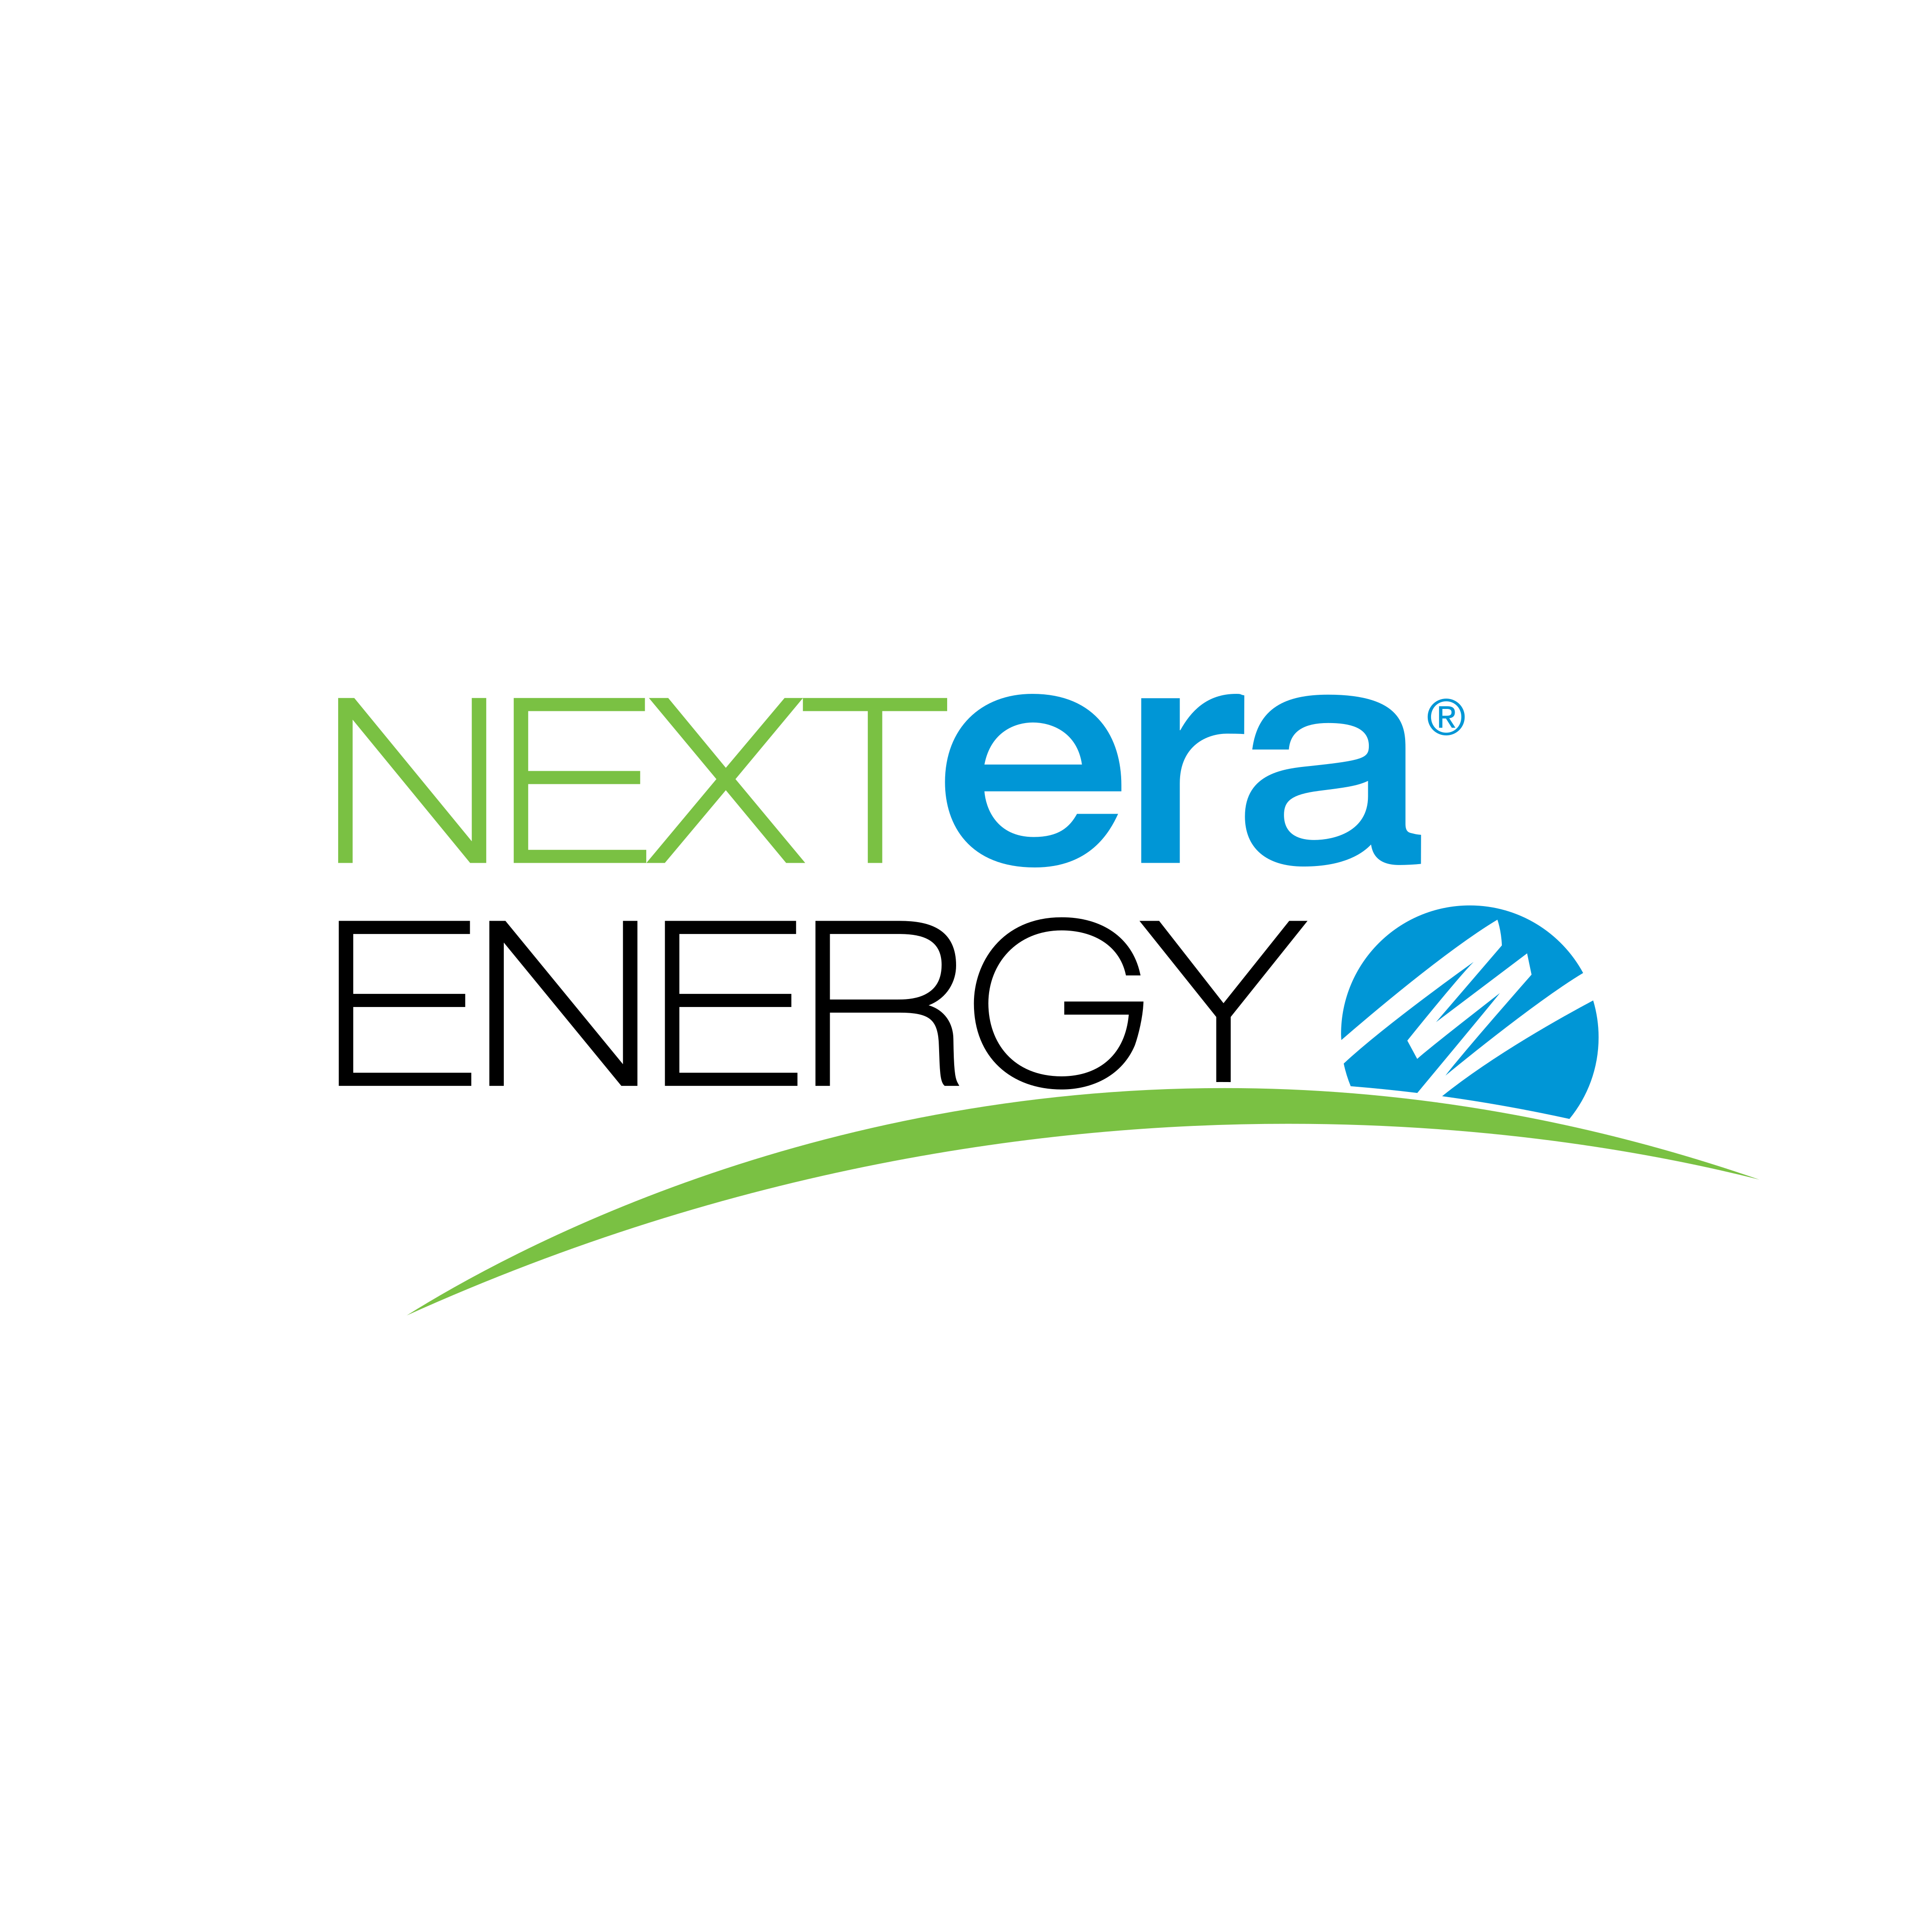 nextera energy logo 0 - NextEra Energy Logo